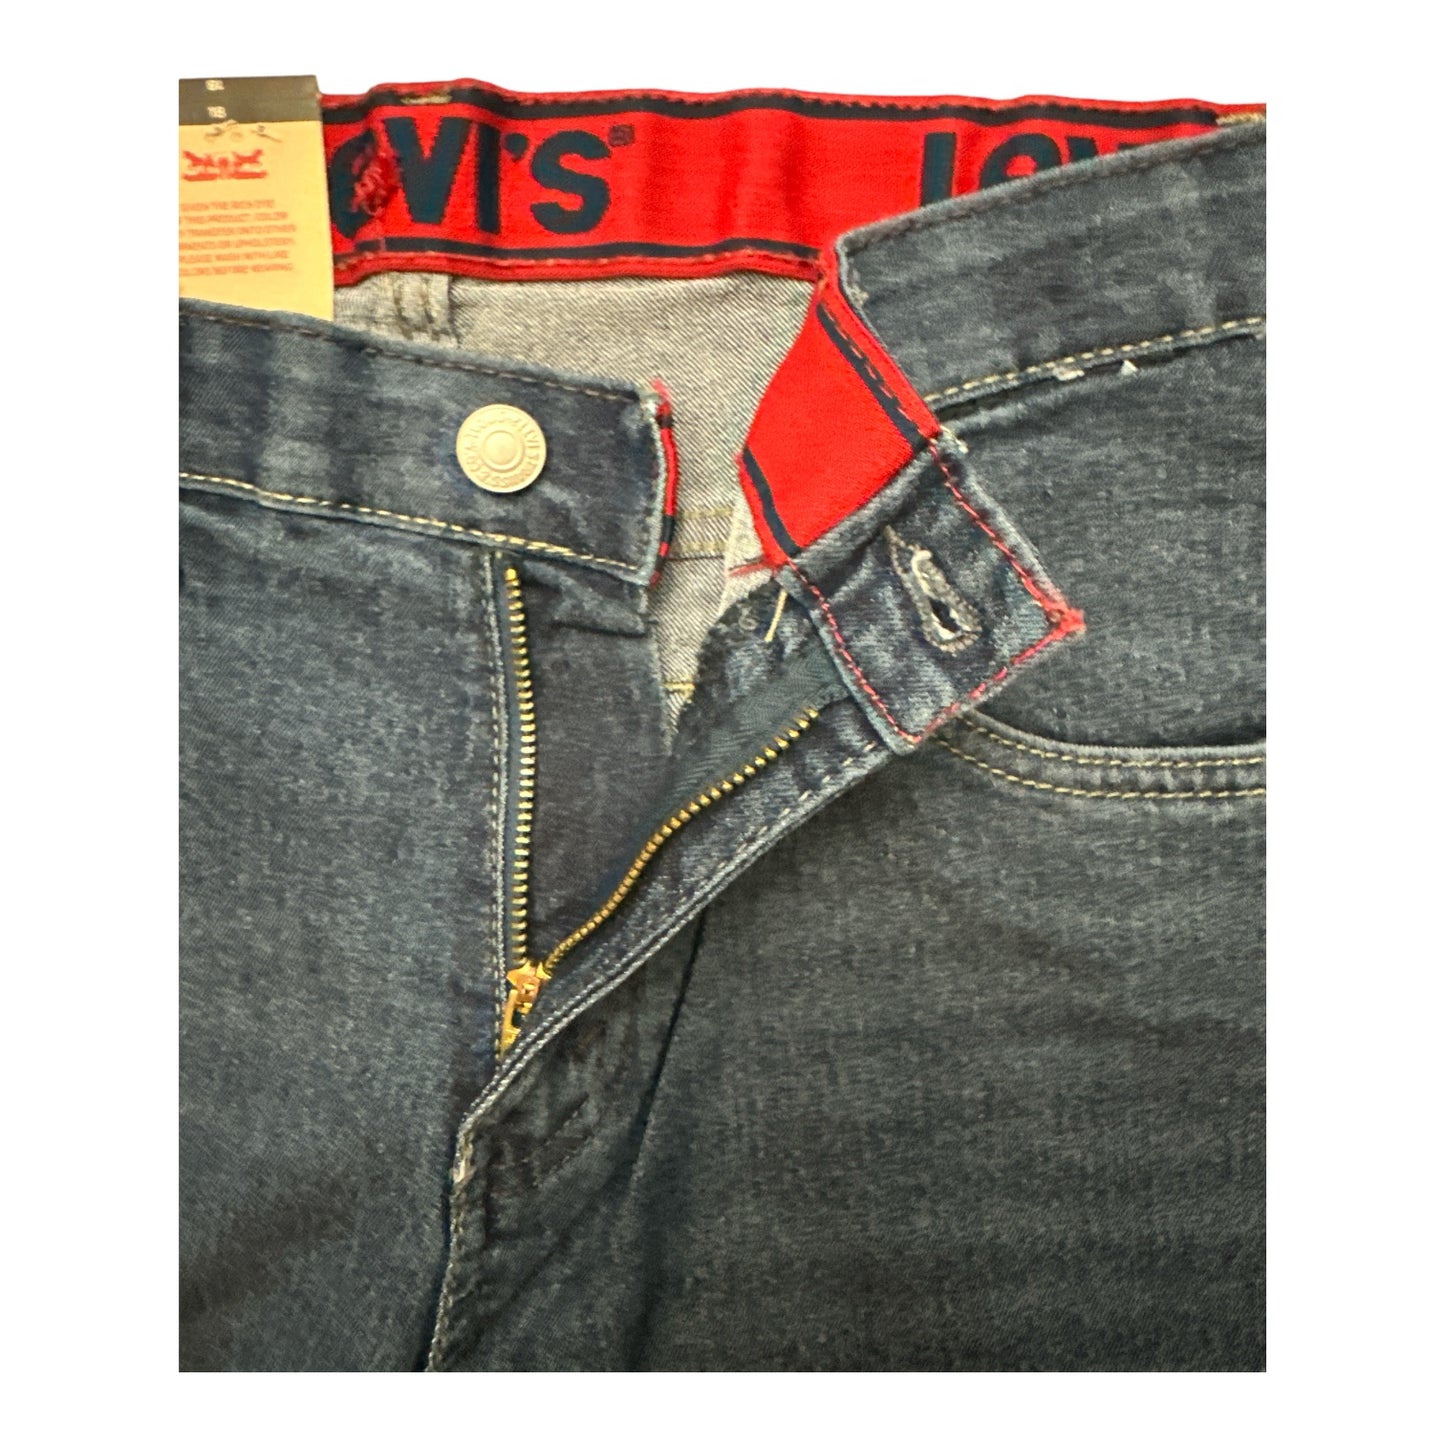 Levi's Boy's 511 Modern Slim Flex Stretch 5 Pocket Jeans